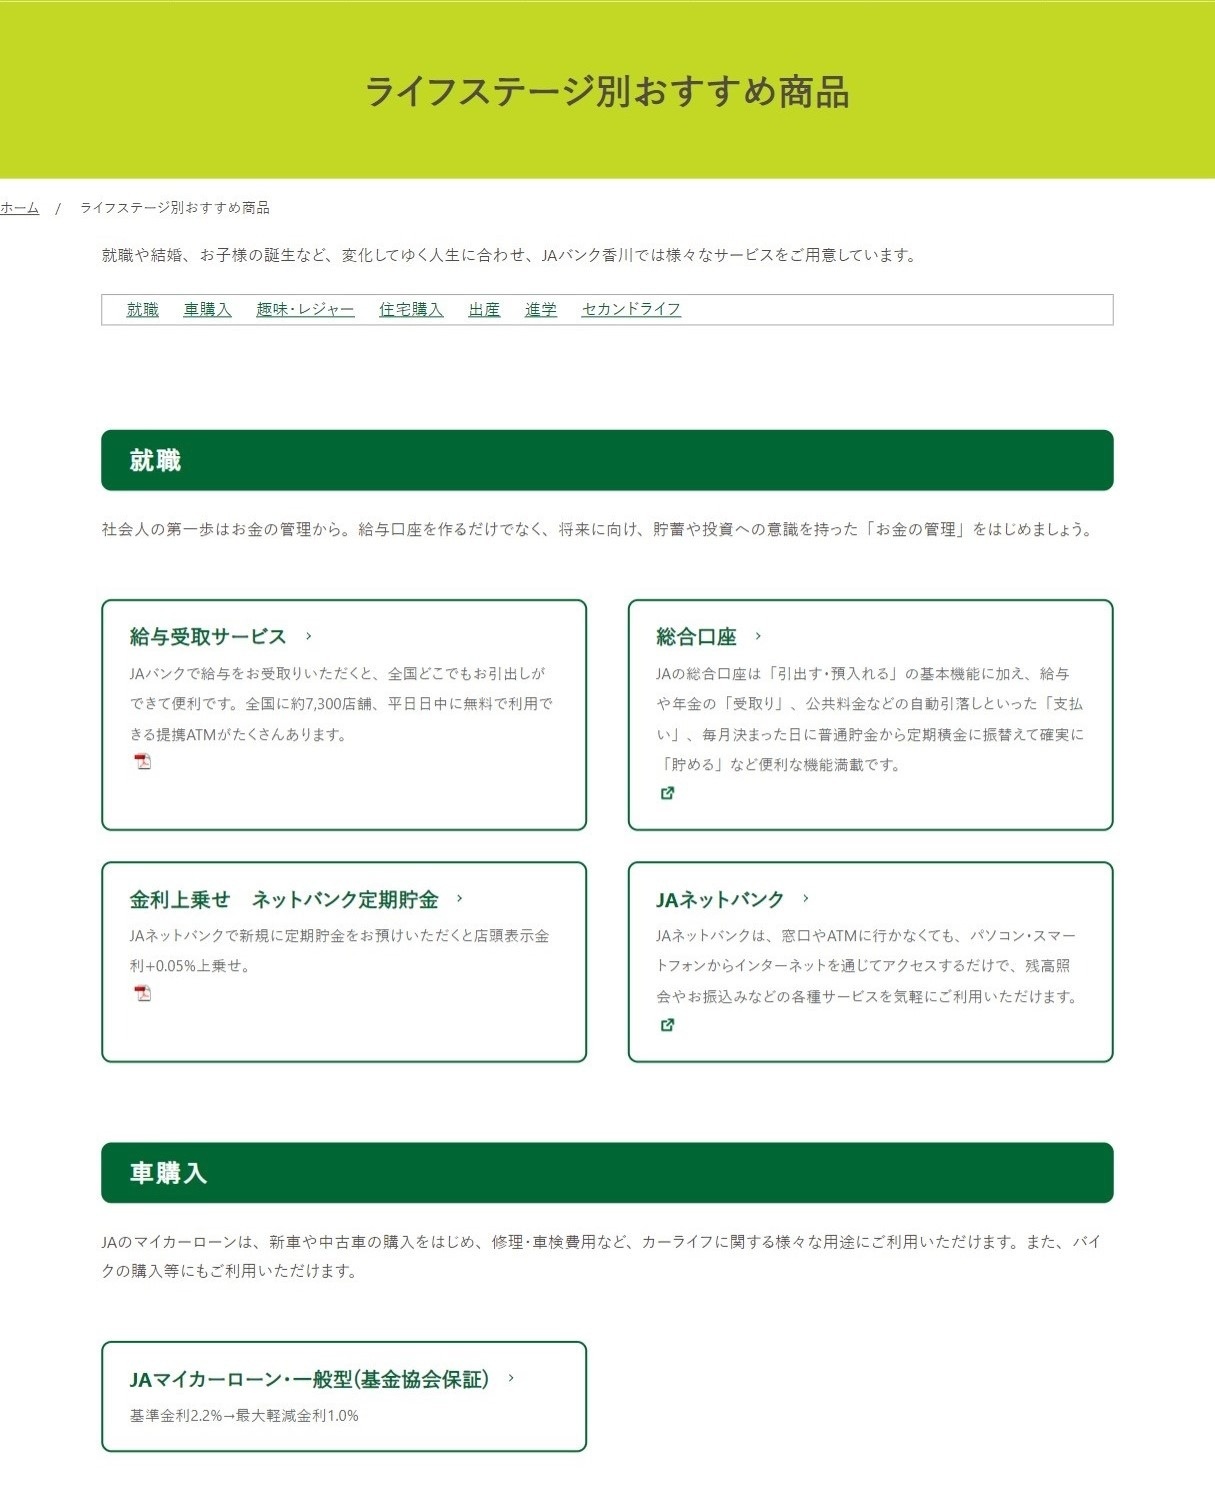 JAバンク香川様ホームページ ライフステージ別のおすすめ商品の紹介